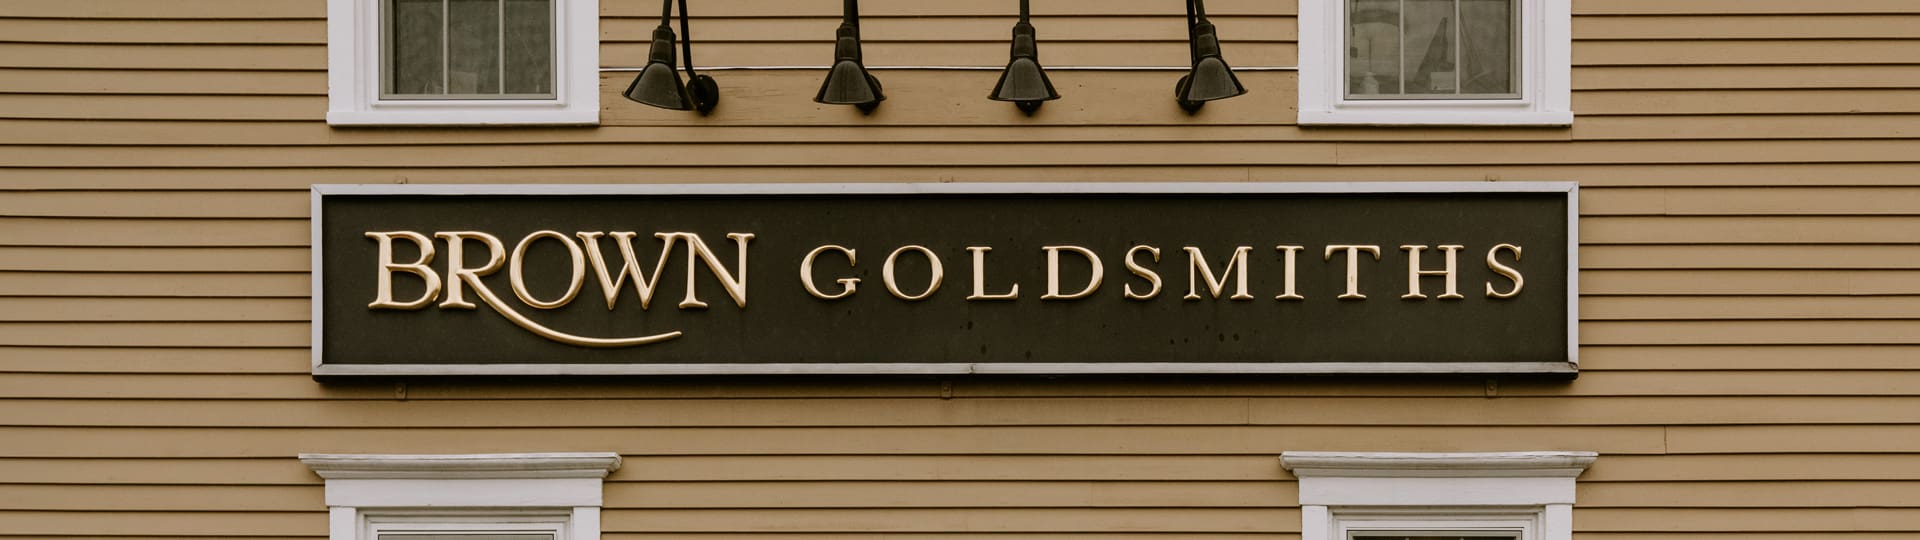 Brown Goldsmiths Building Sign